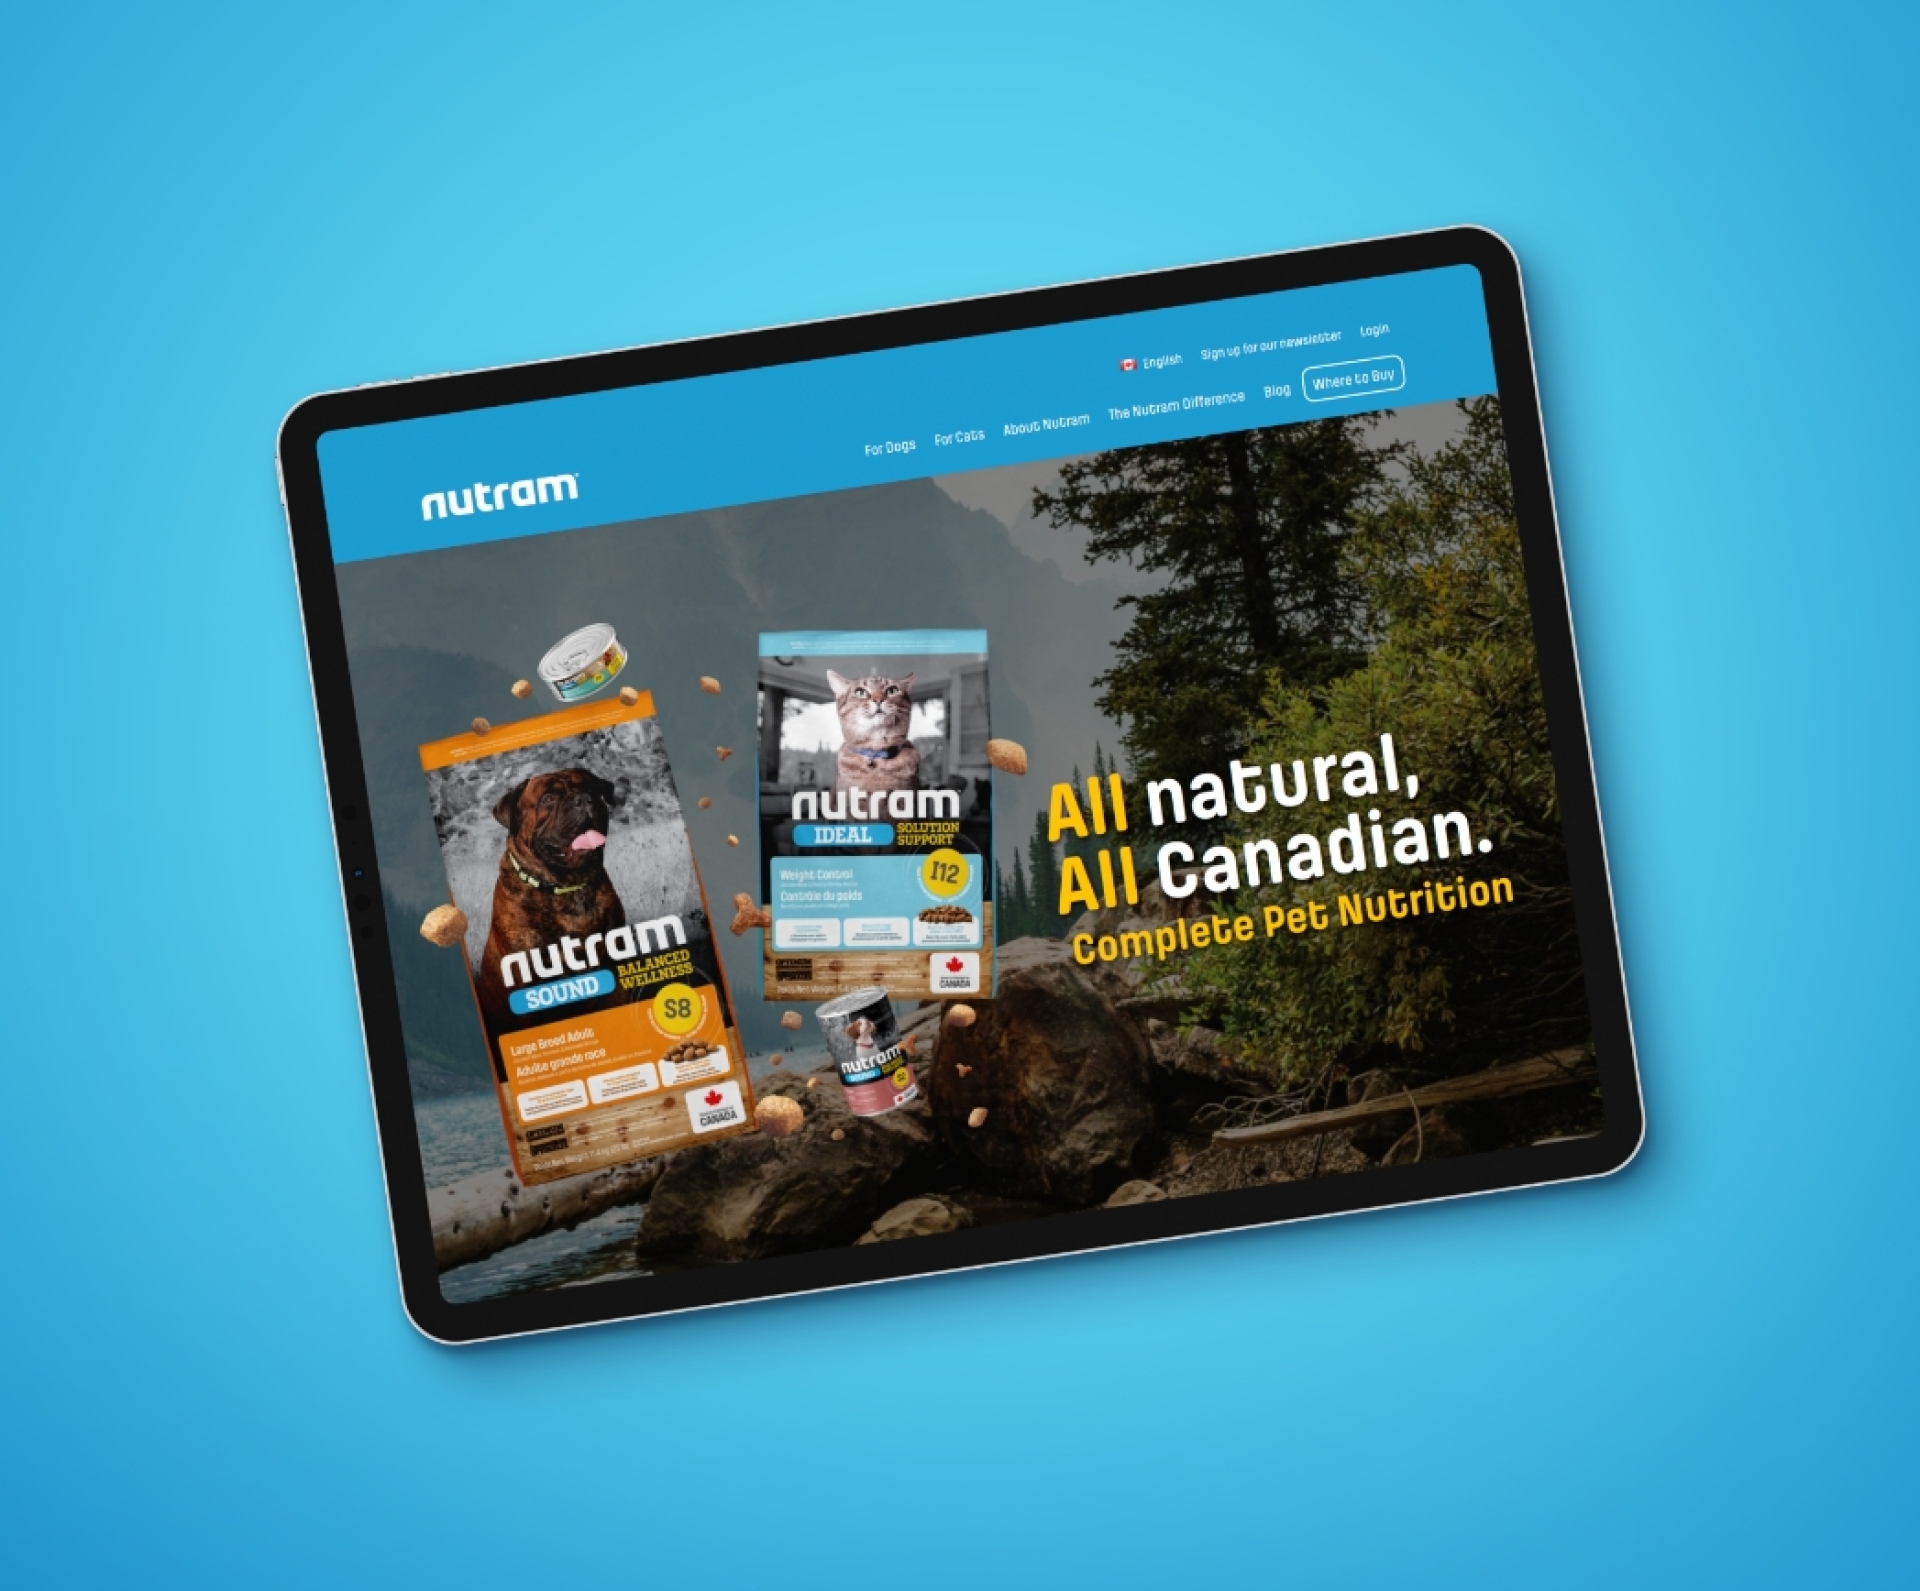 The Nutram website homepage on a tablet